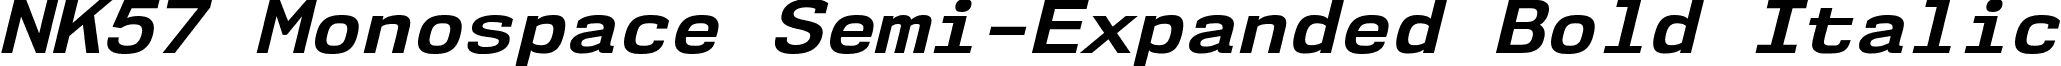 NK57 Monospace Semi-Expanded Bold Italic font - nk57-monospace.semi-expanded-bold-italic.ttf